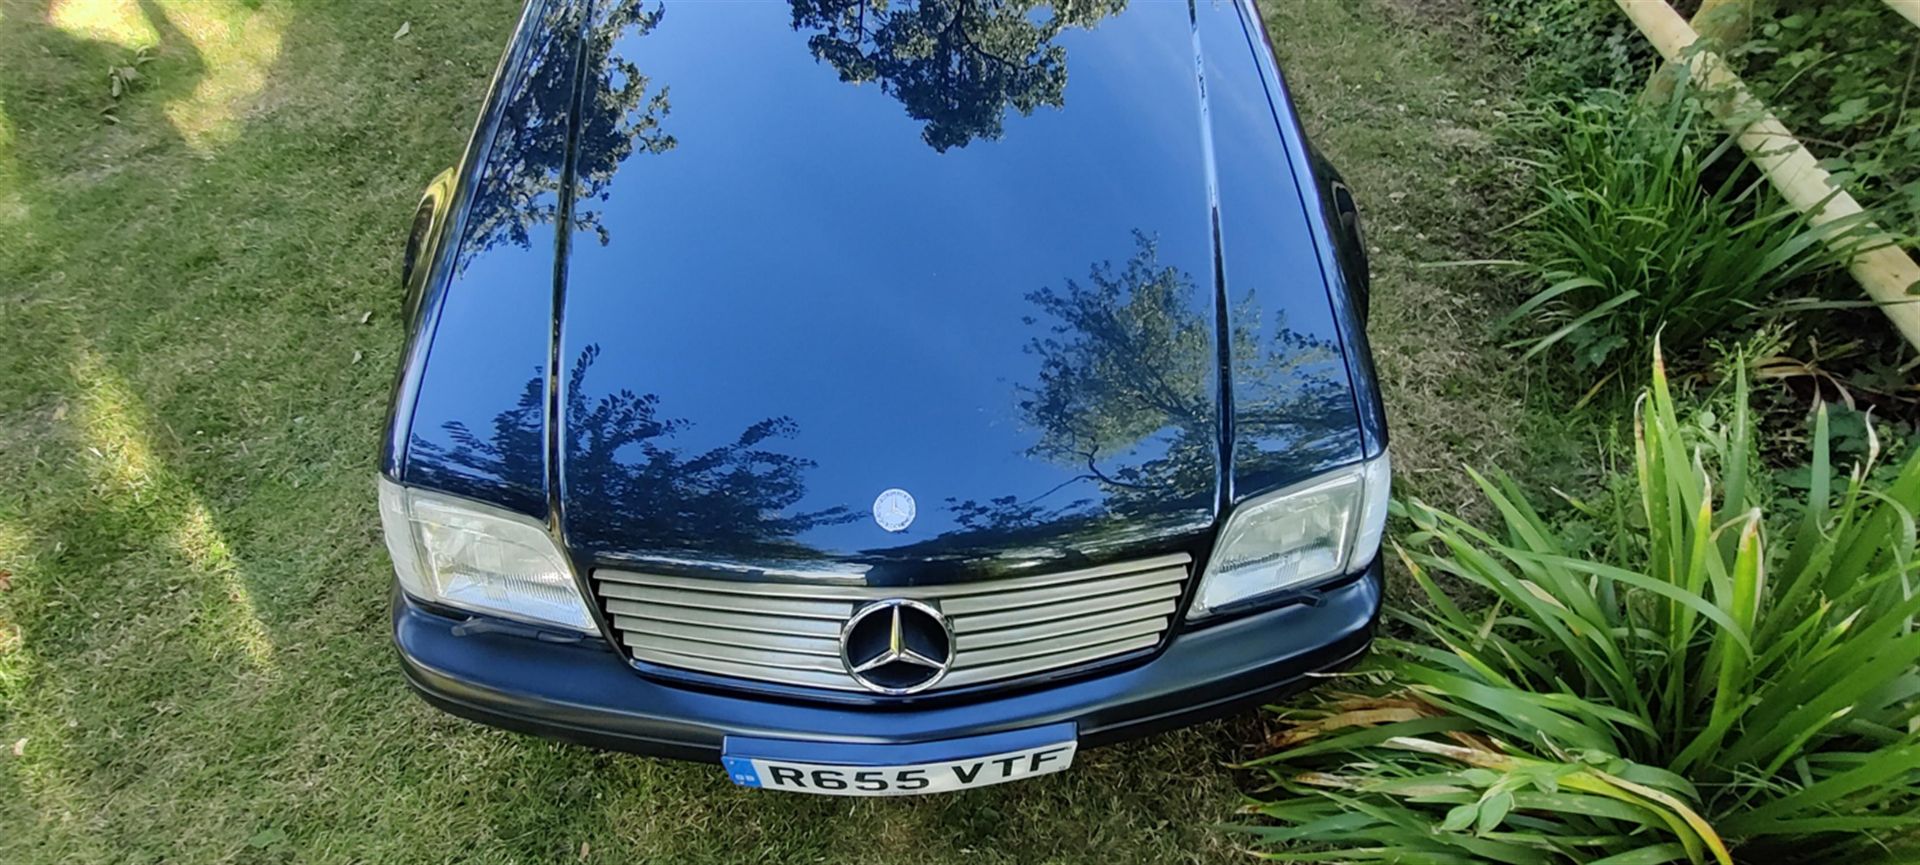 1998 Mercedes-Benz SL500 (R129) - Image 8 of 8